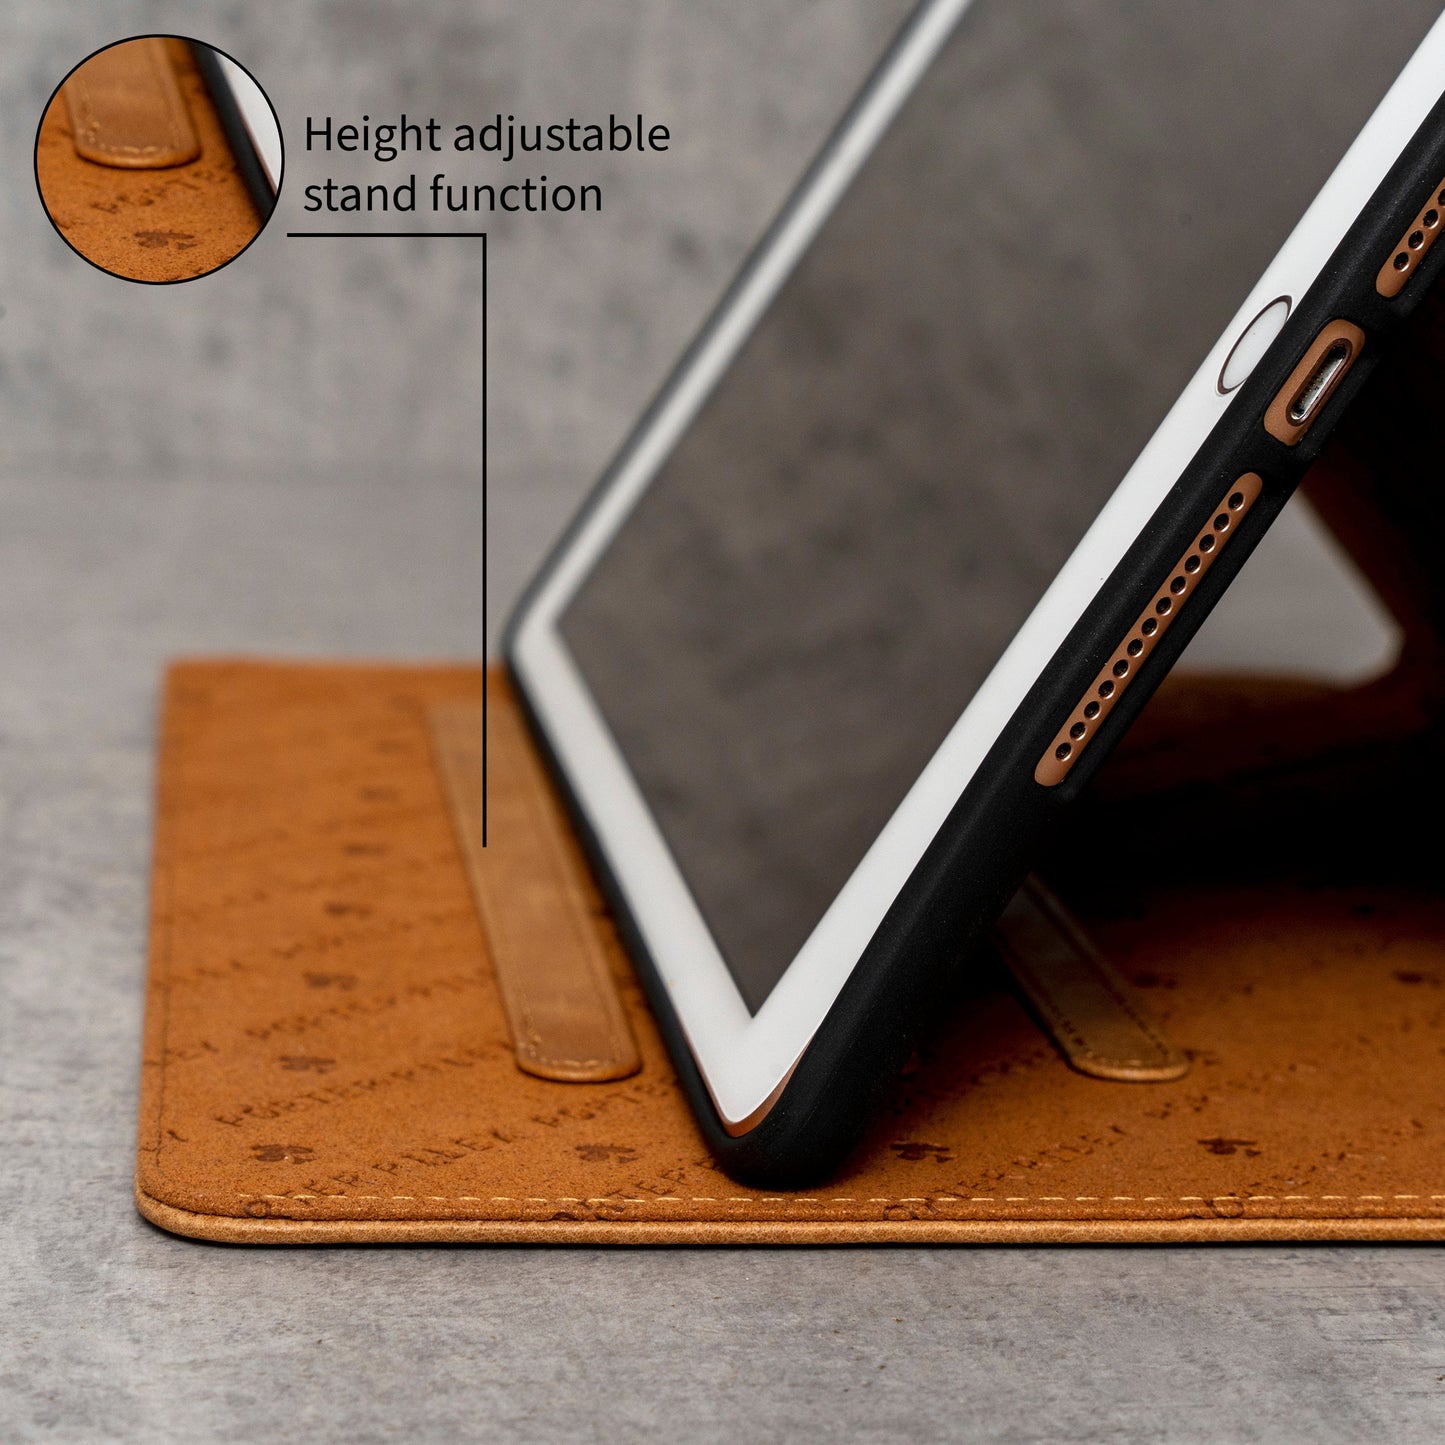 iPad Pro 10.5" (iPad Pro 2) Leather Case. Premium Slim Genuine Leather Stand